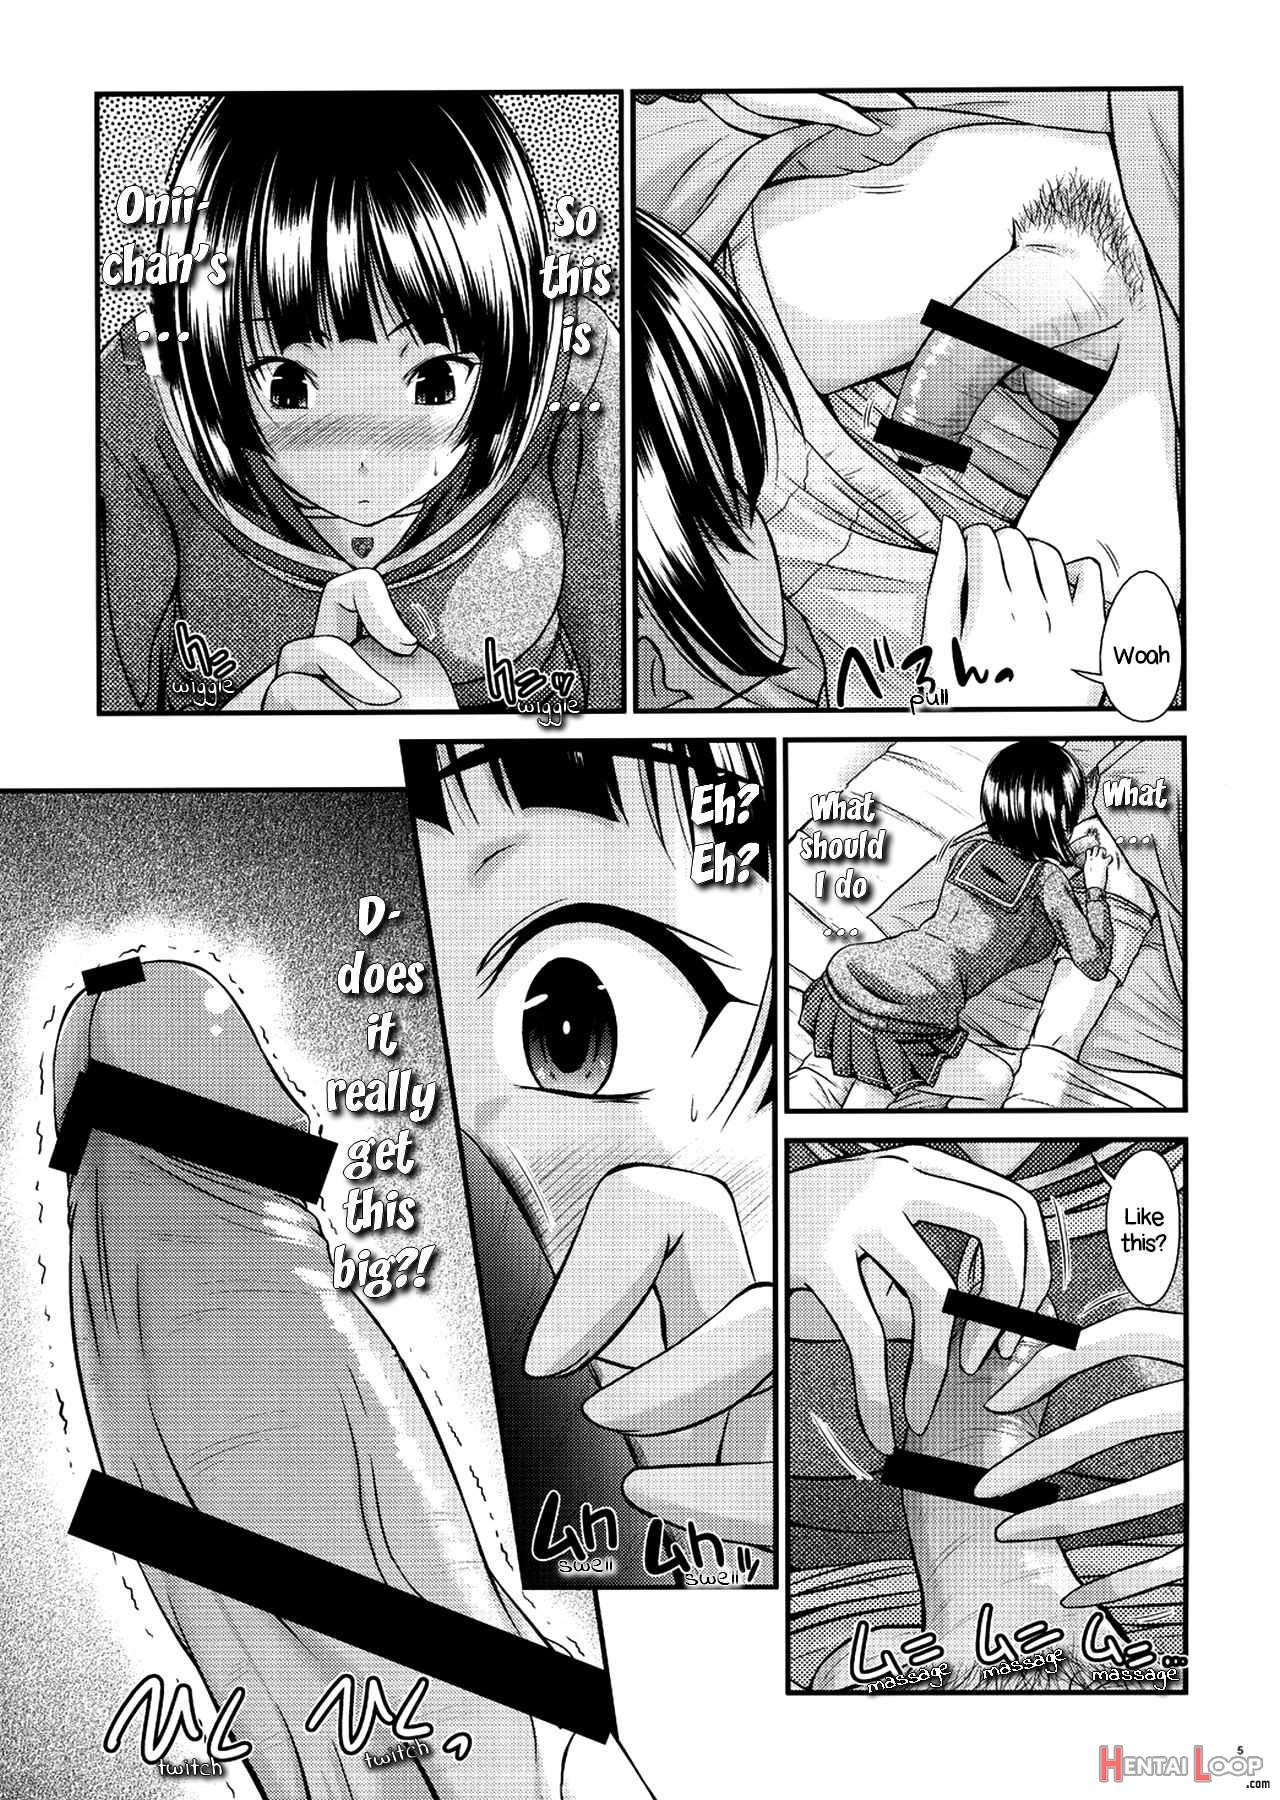 Suguha's Secret page 4